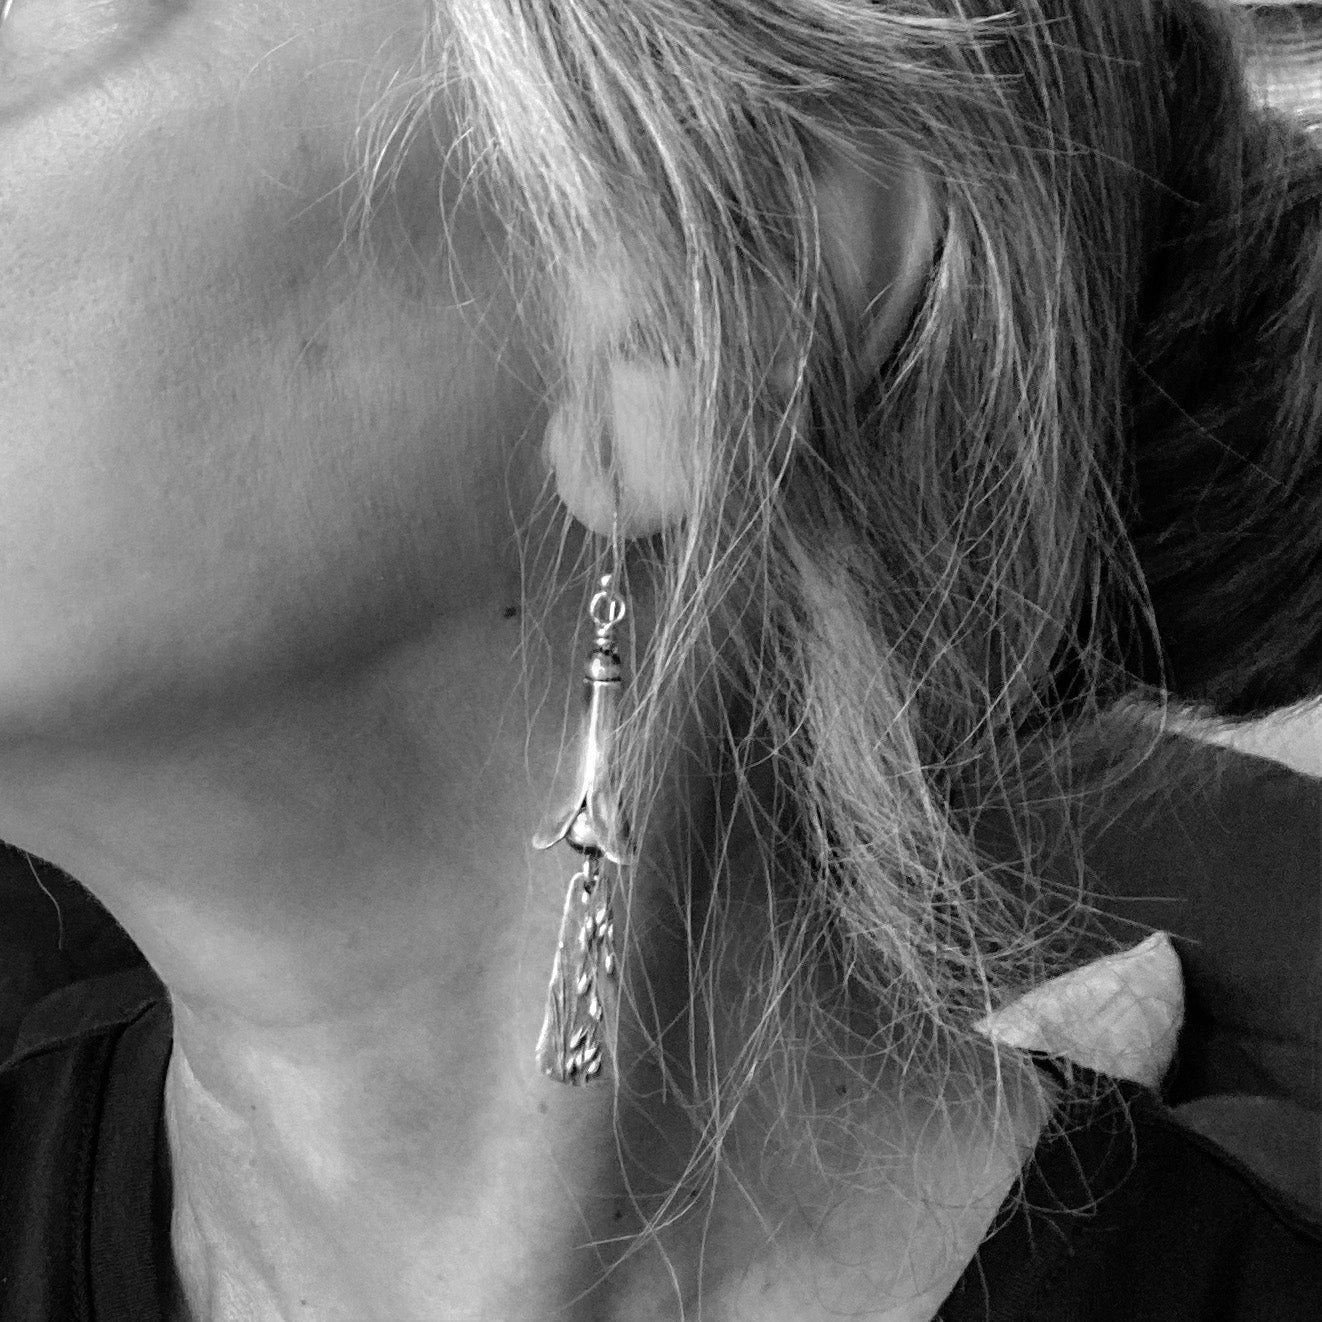 Silver Squash Blossom Earrings with Cedar